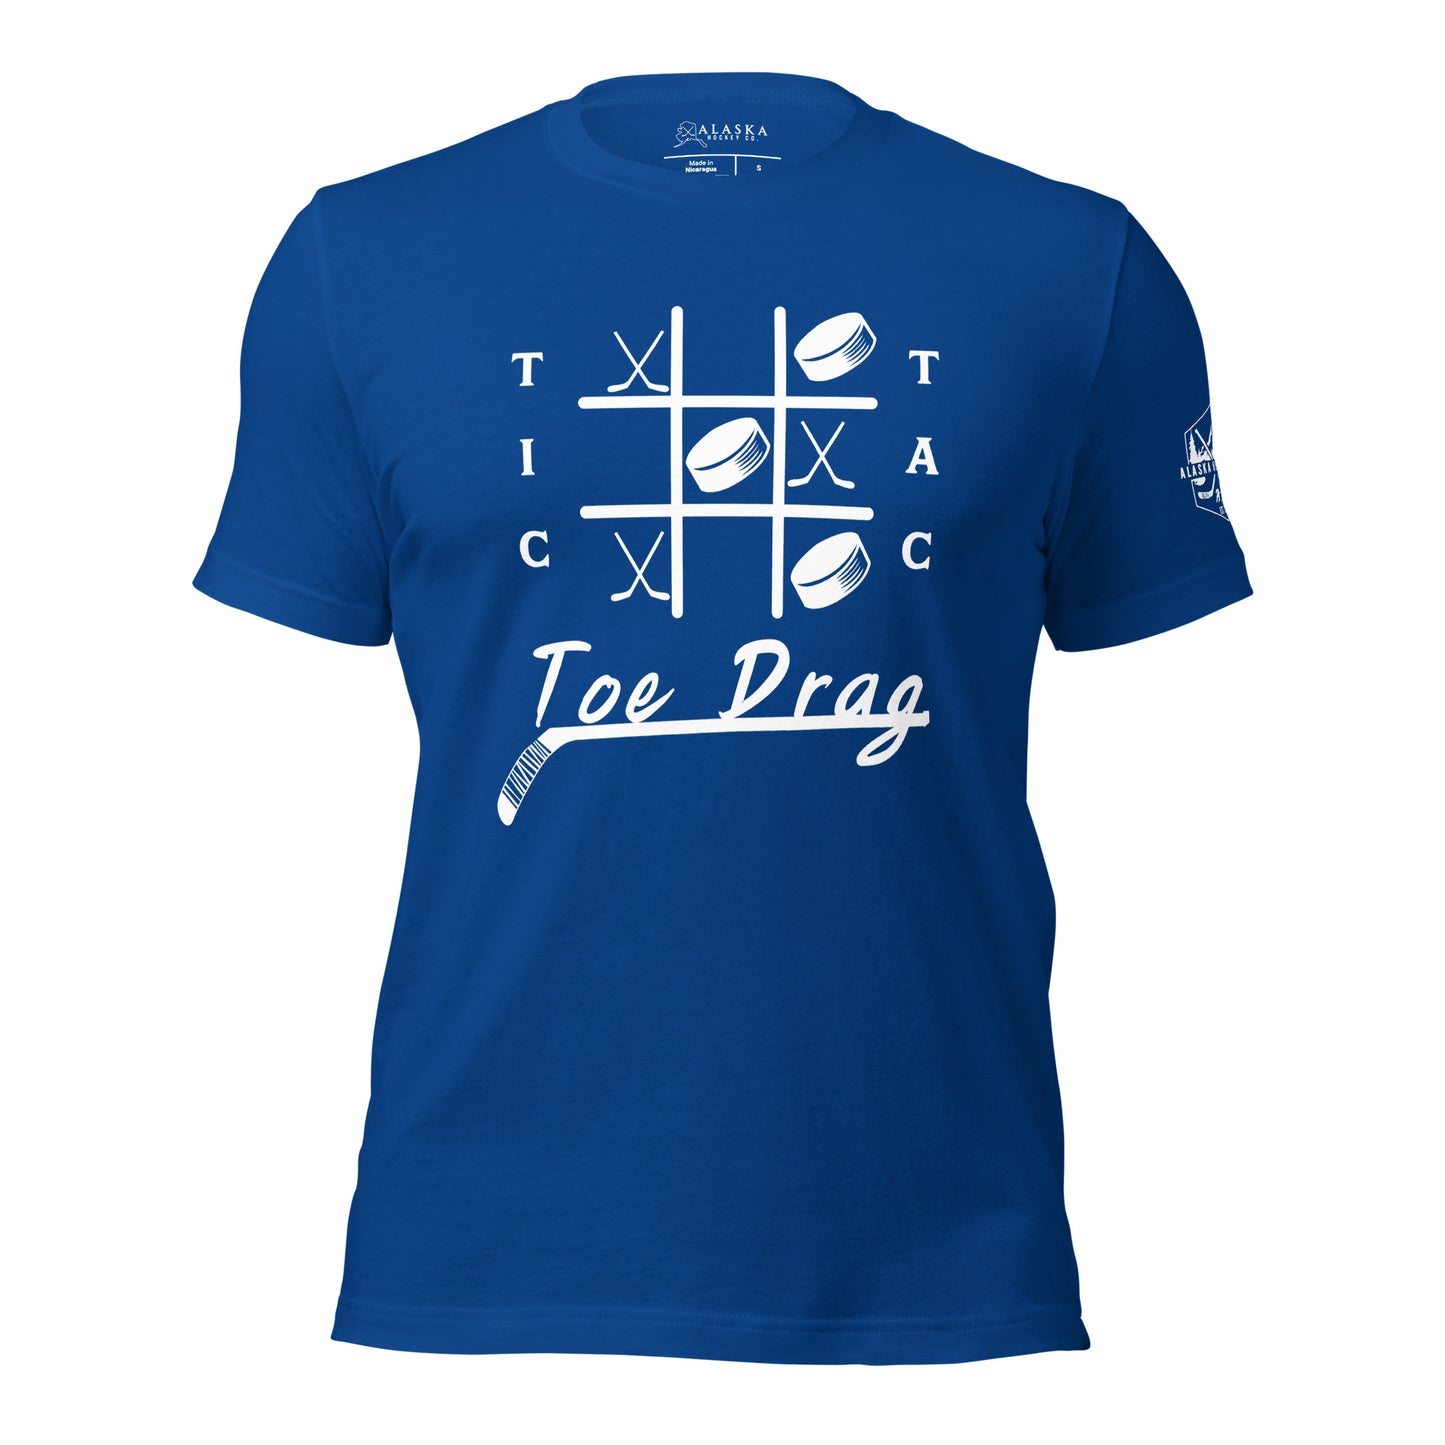 Tic Tac Toe Drag T-Shirt